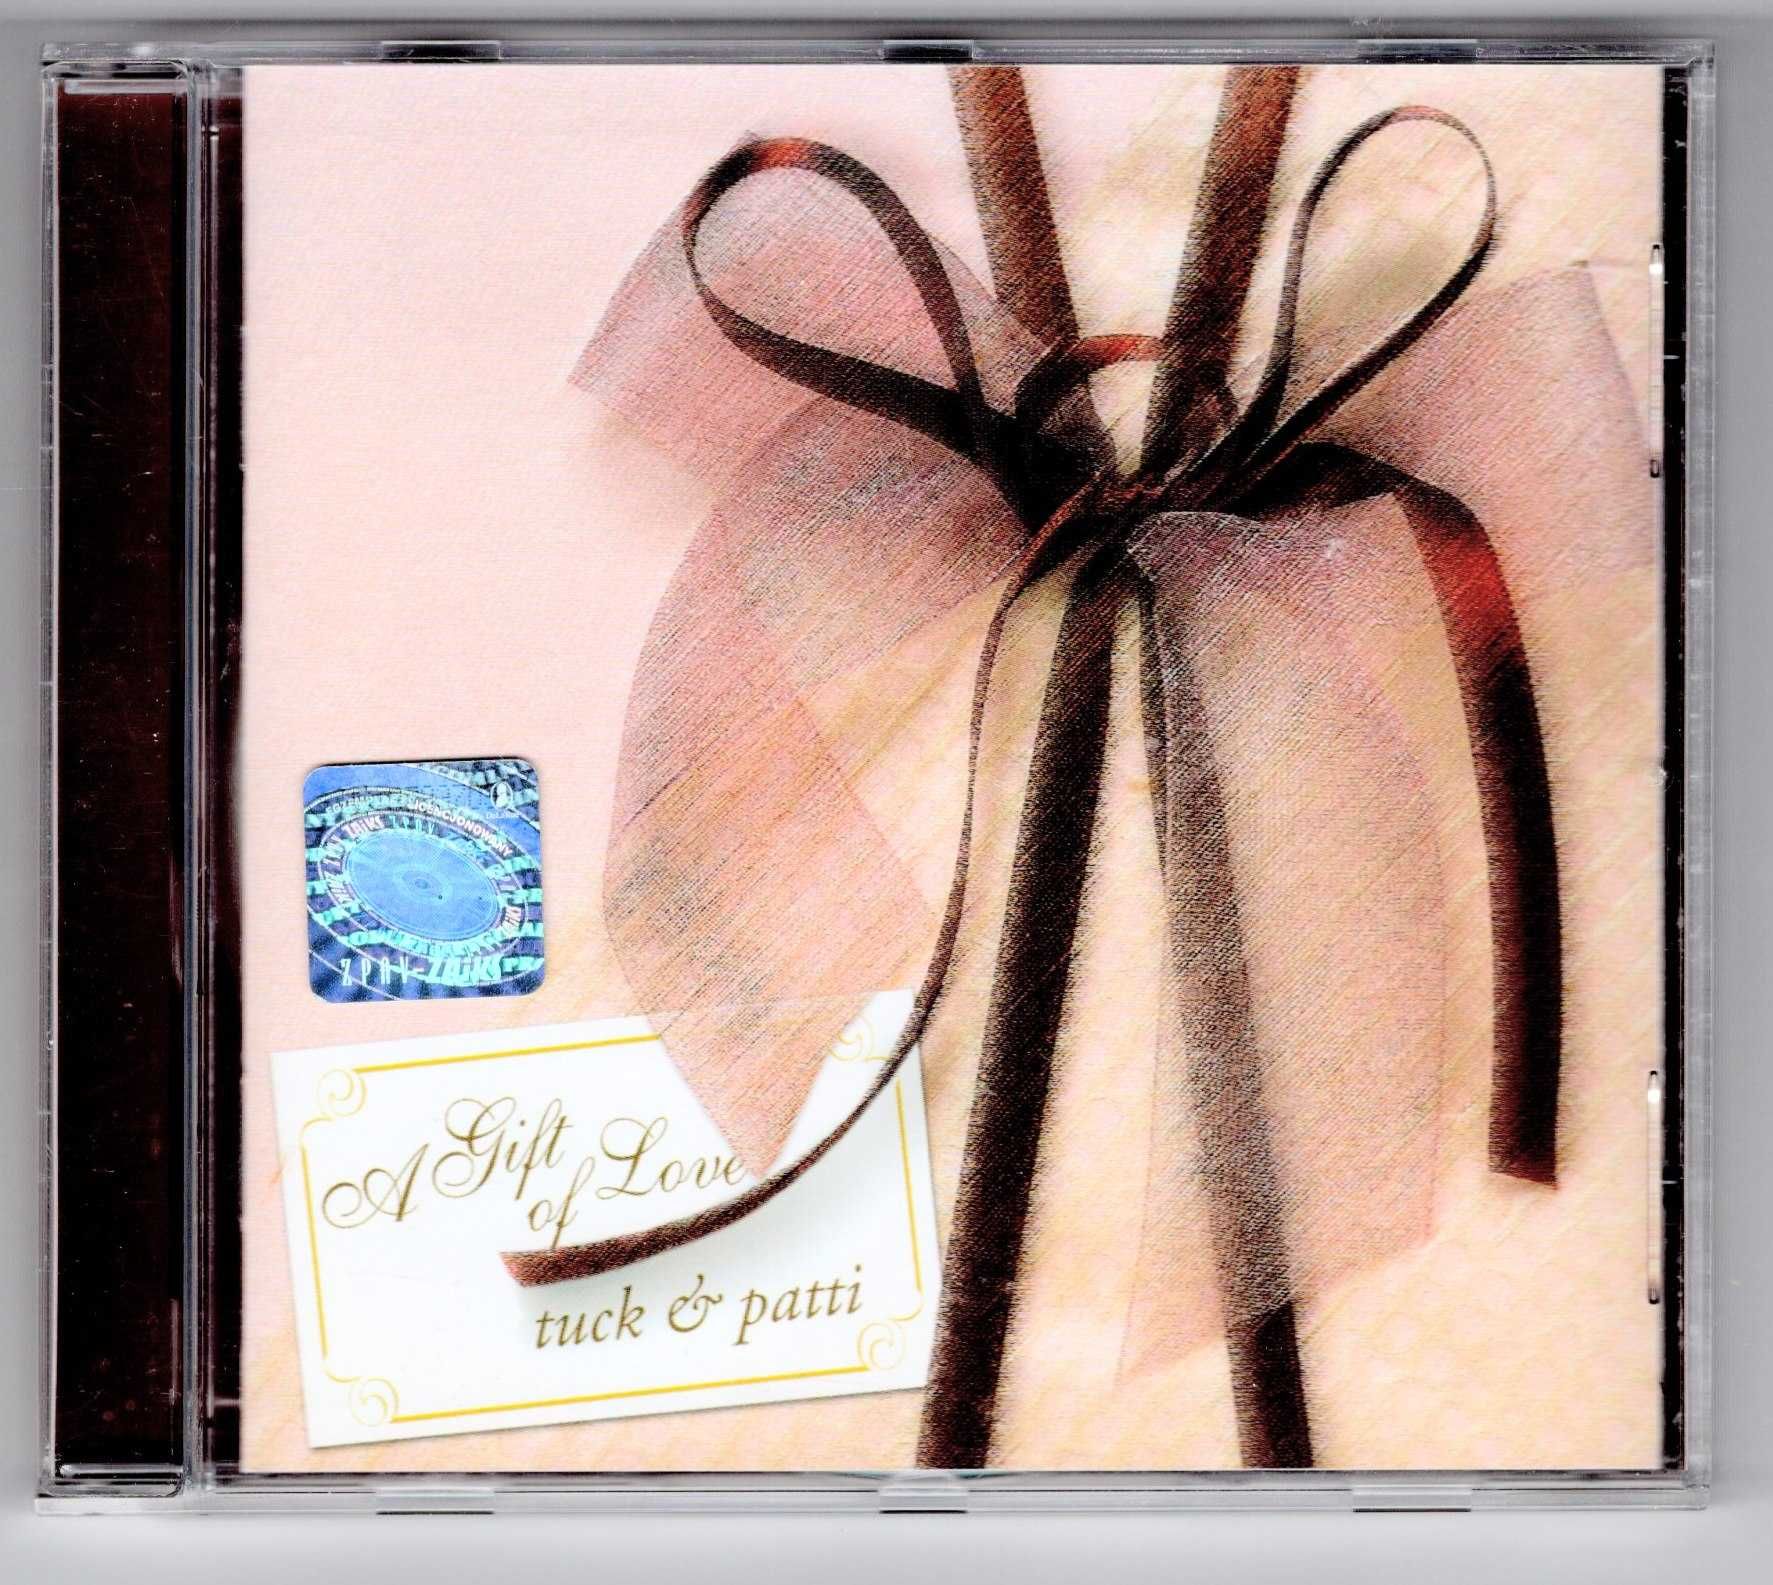 Tuck & Patti - A Gift Of Love (CD)